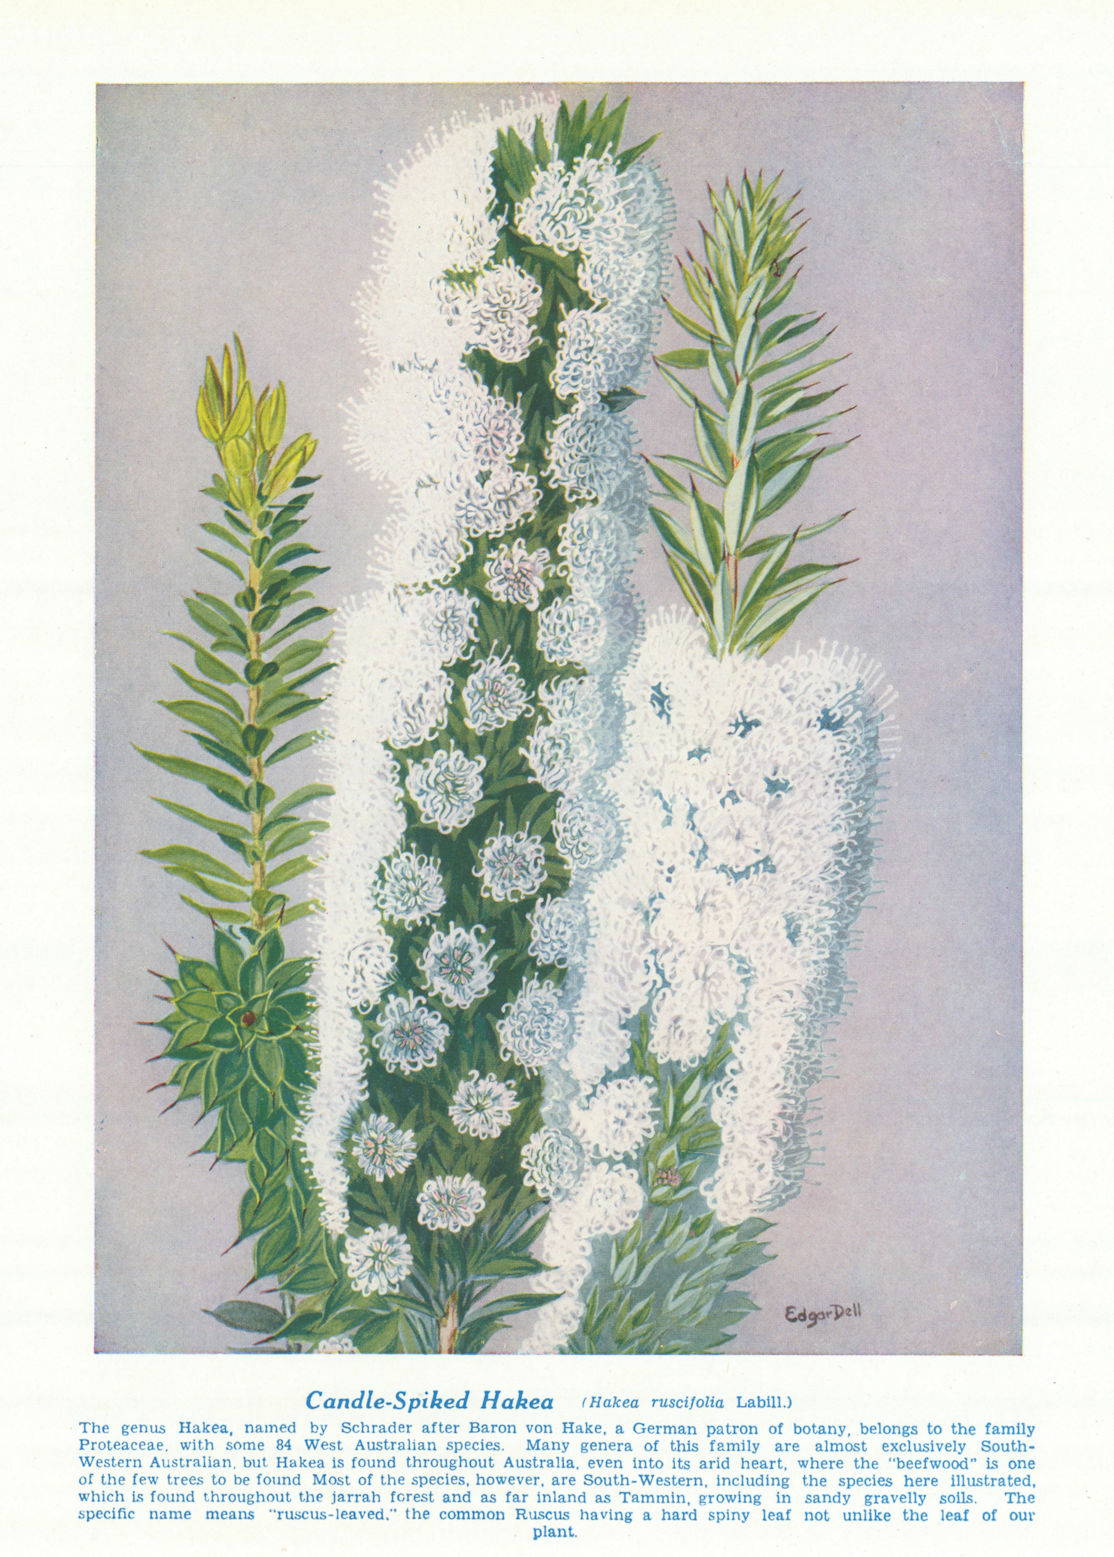 Associate Product Candle-spiked Hakea (Hakea ruscifolia). West Australian Wild Flowers 1950